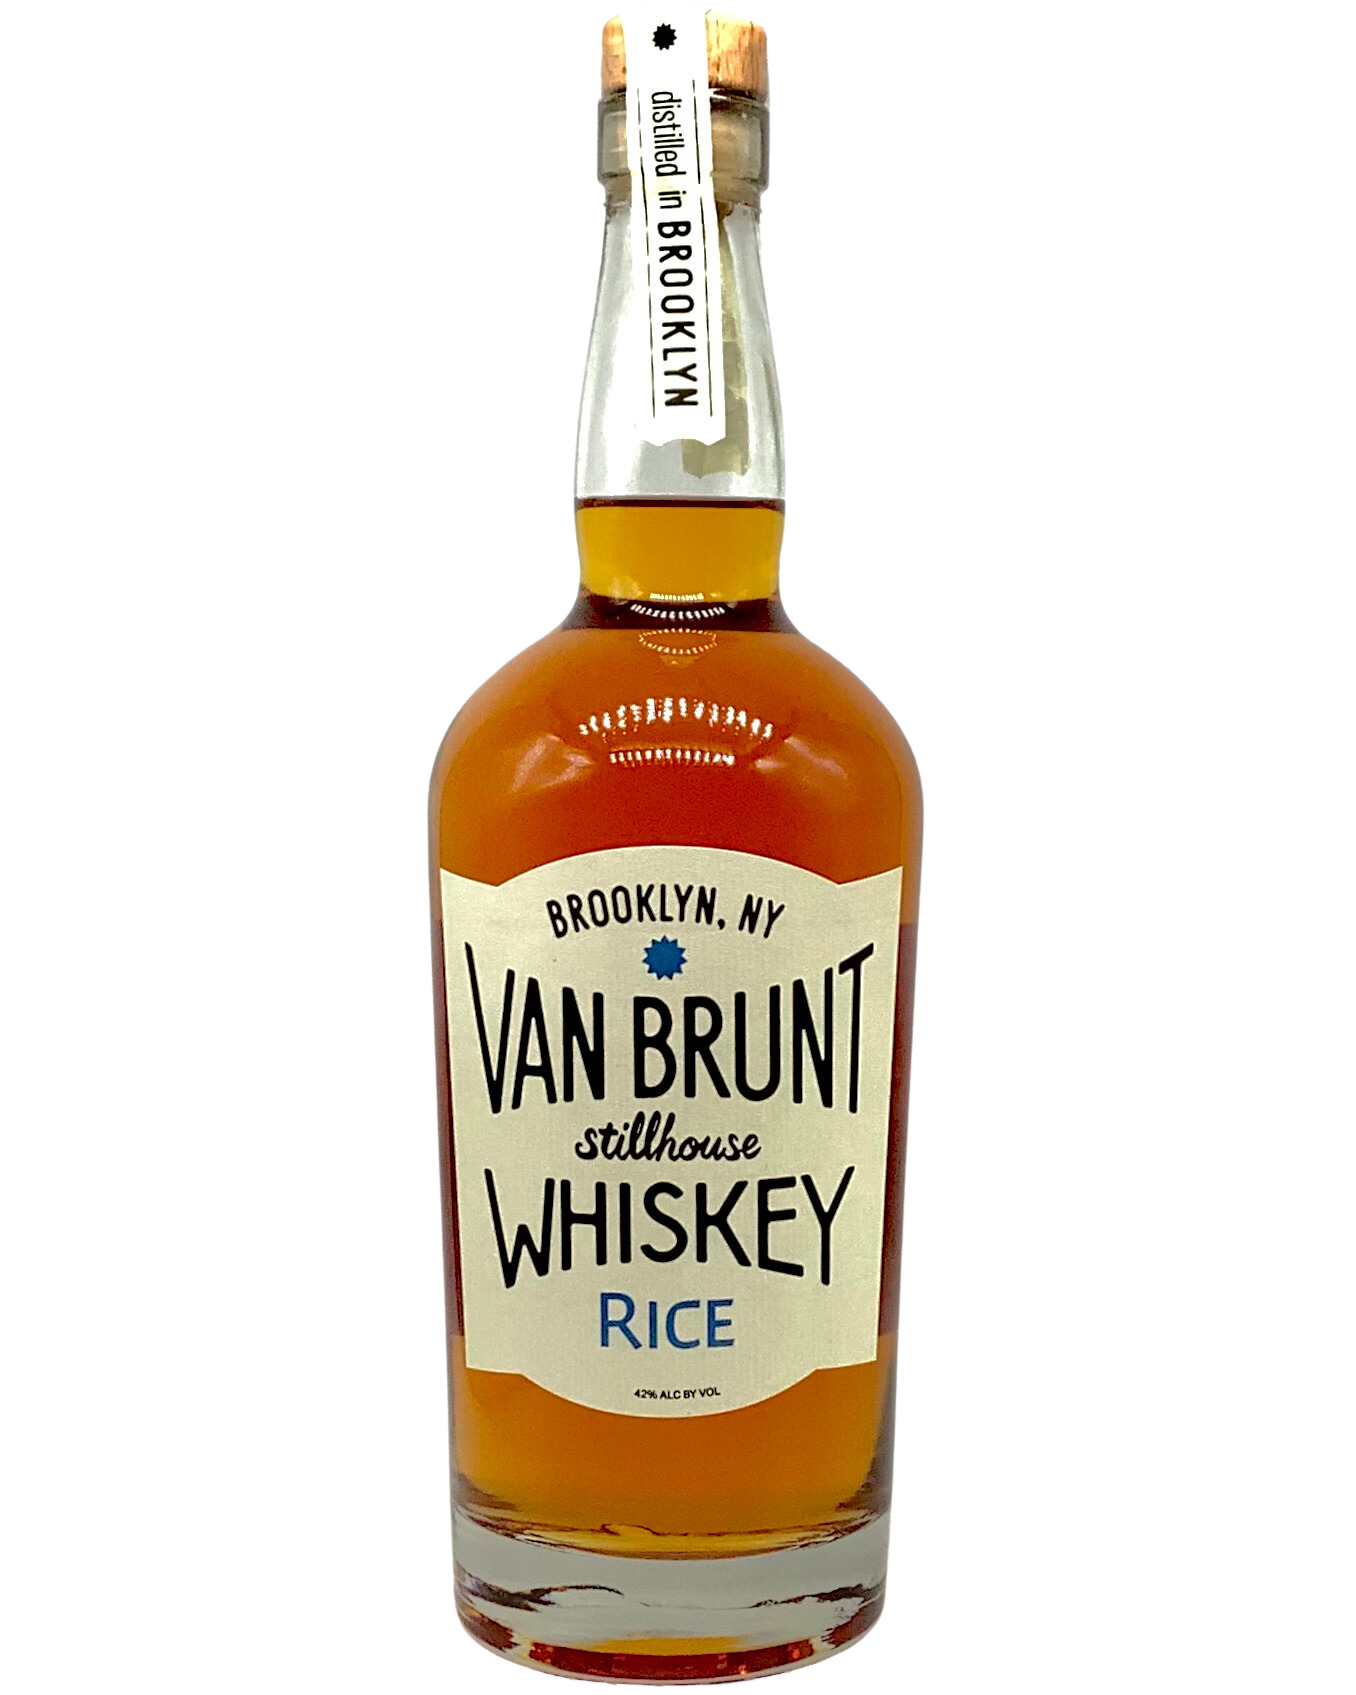 Van Brunt Stillhouse Rice Whiskey, Brooklyn NY 750ml newarrival